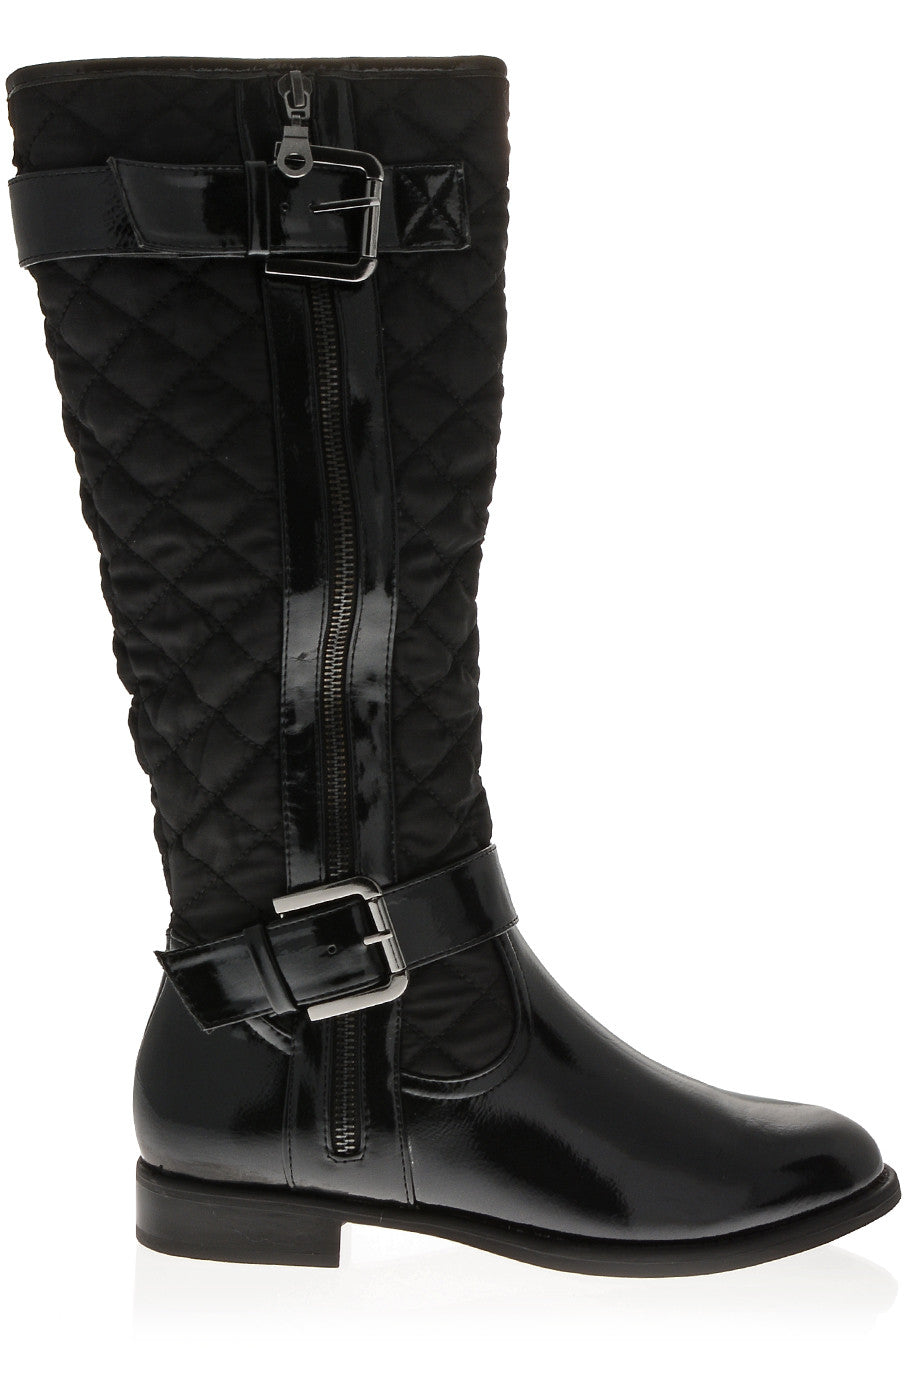 High boots - Crumpled shiny fabric & patent calfskin, black — Fashion